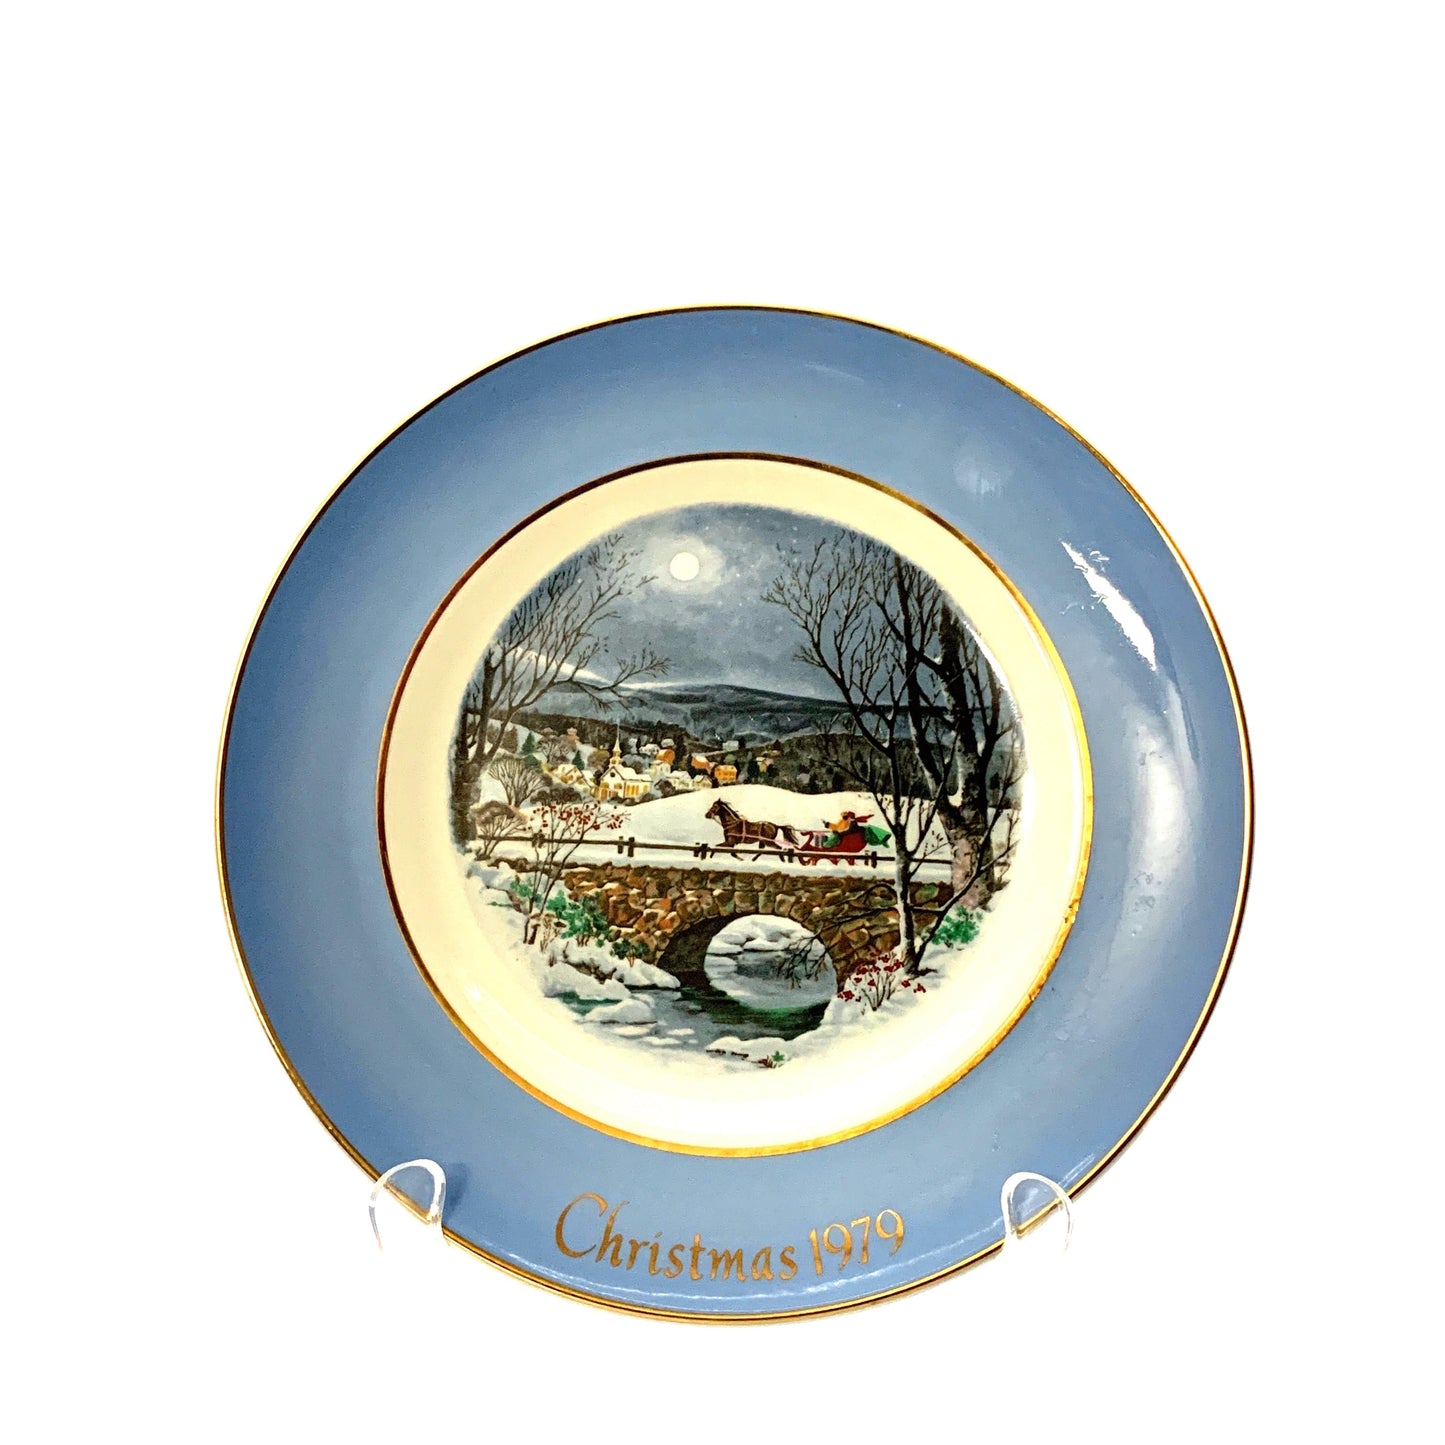 Vintage Avon Christmas Plate Series Seventh Edition “Dashing Through The Snow” 1979